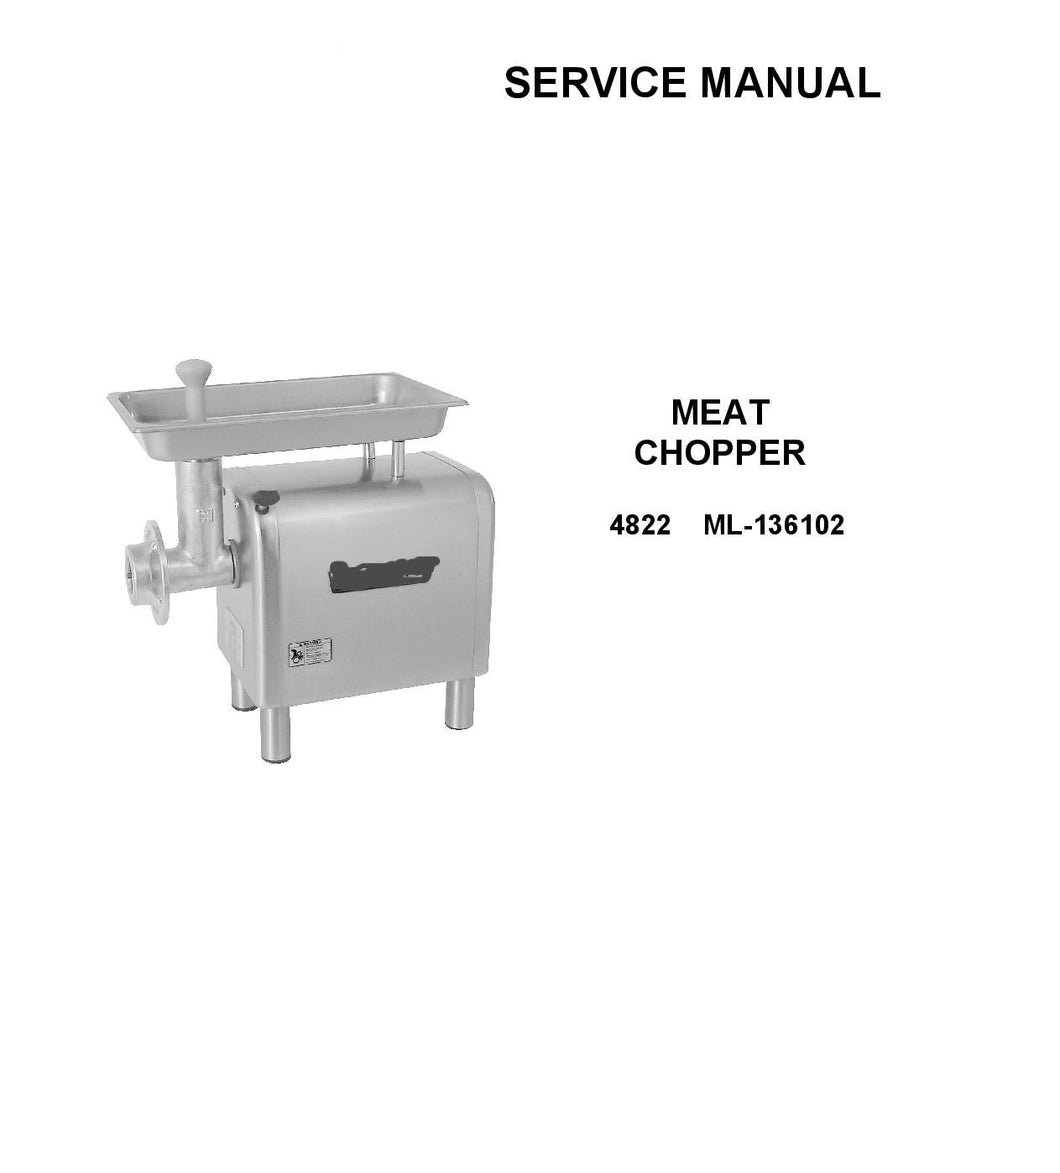 HOBART MODEL 4822 MEAT CHOPPER SERVICE, TECHNICAL AND REPAIR MANUALS PDF